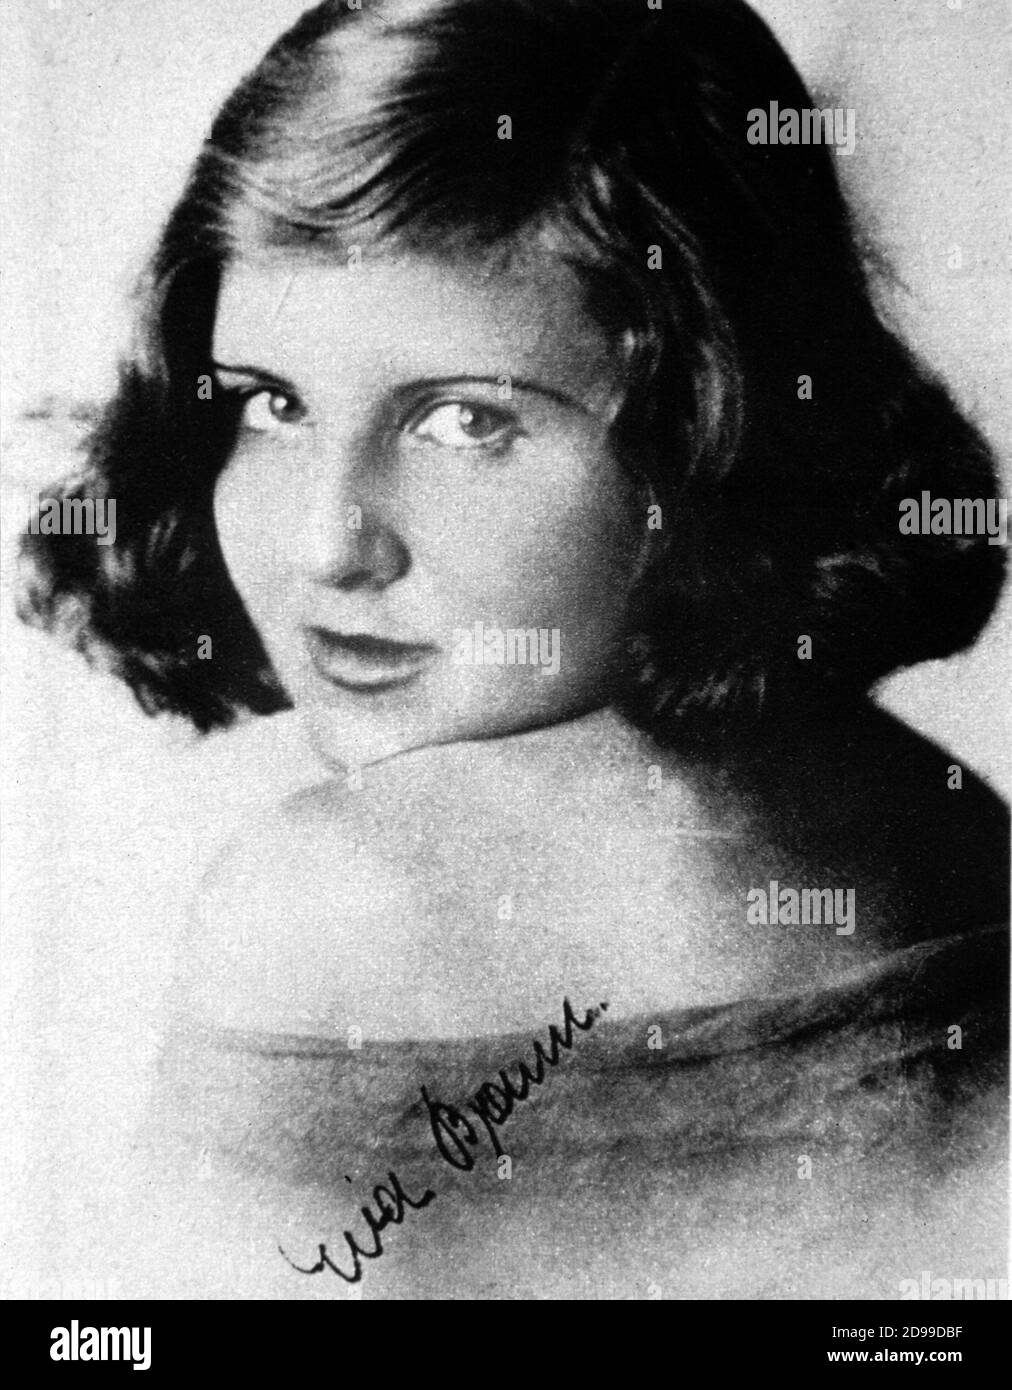 1929 :  EVA BRAUN  ( Munchen , Germany 1912 - Berlin , Germany 1945 ) befor meet ADOLF  HITLER  - NAZI - NAZIST - NAZISMO - WWII - SECONDA GUERRA MONDIALE  ----  ARCHIVIO   GBB Stock Photo